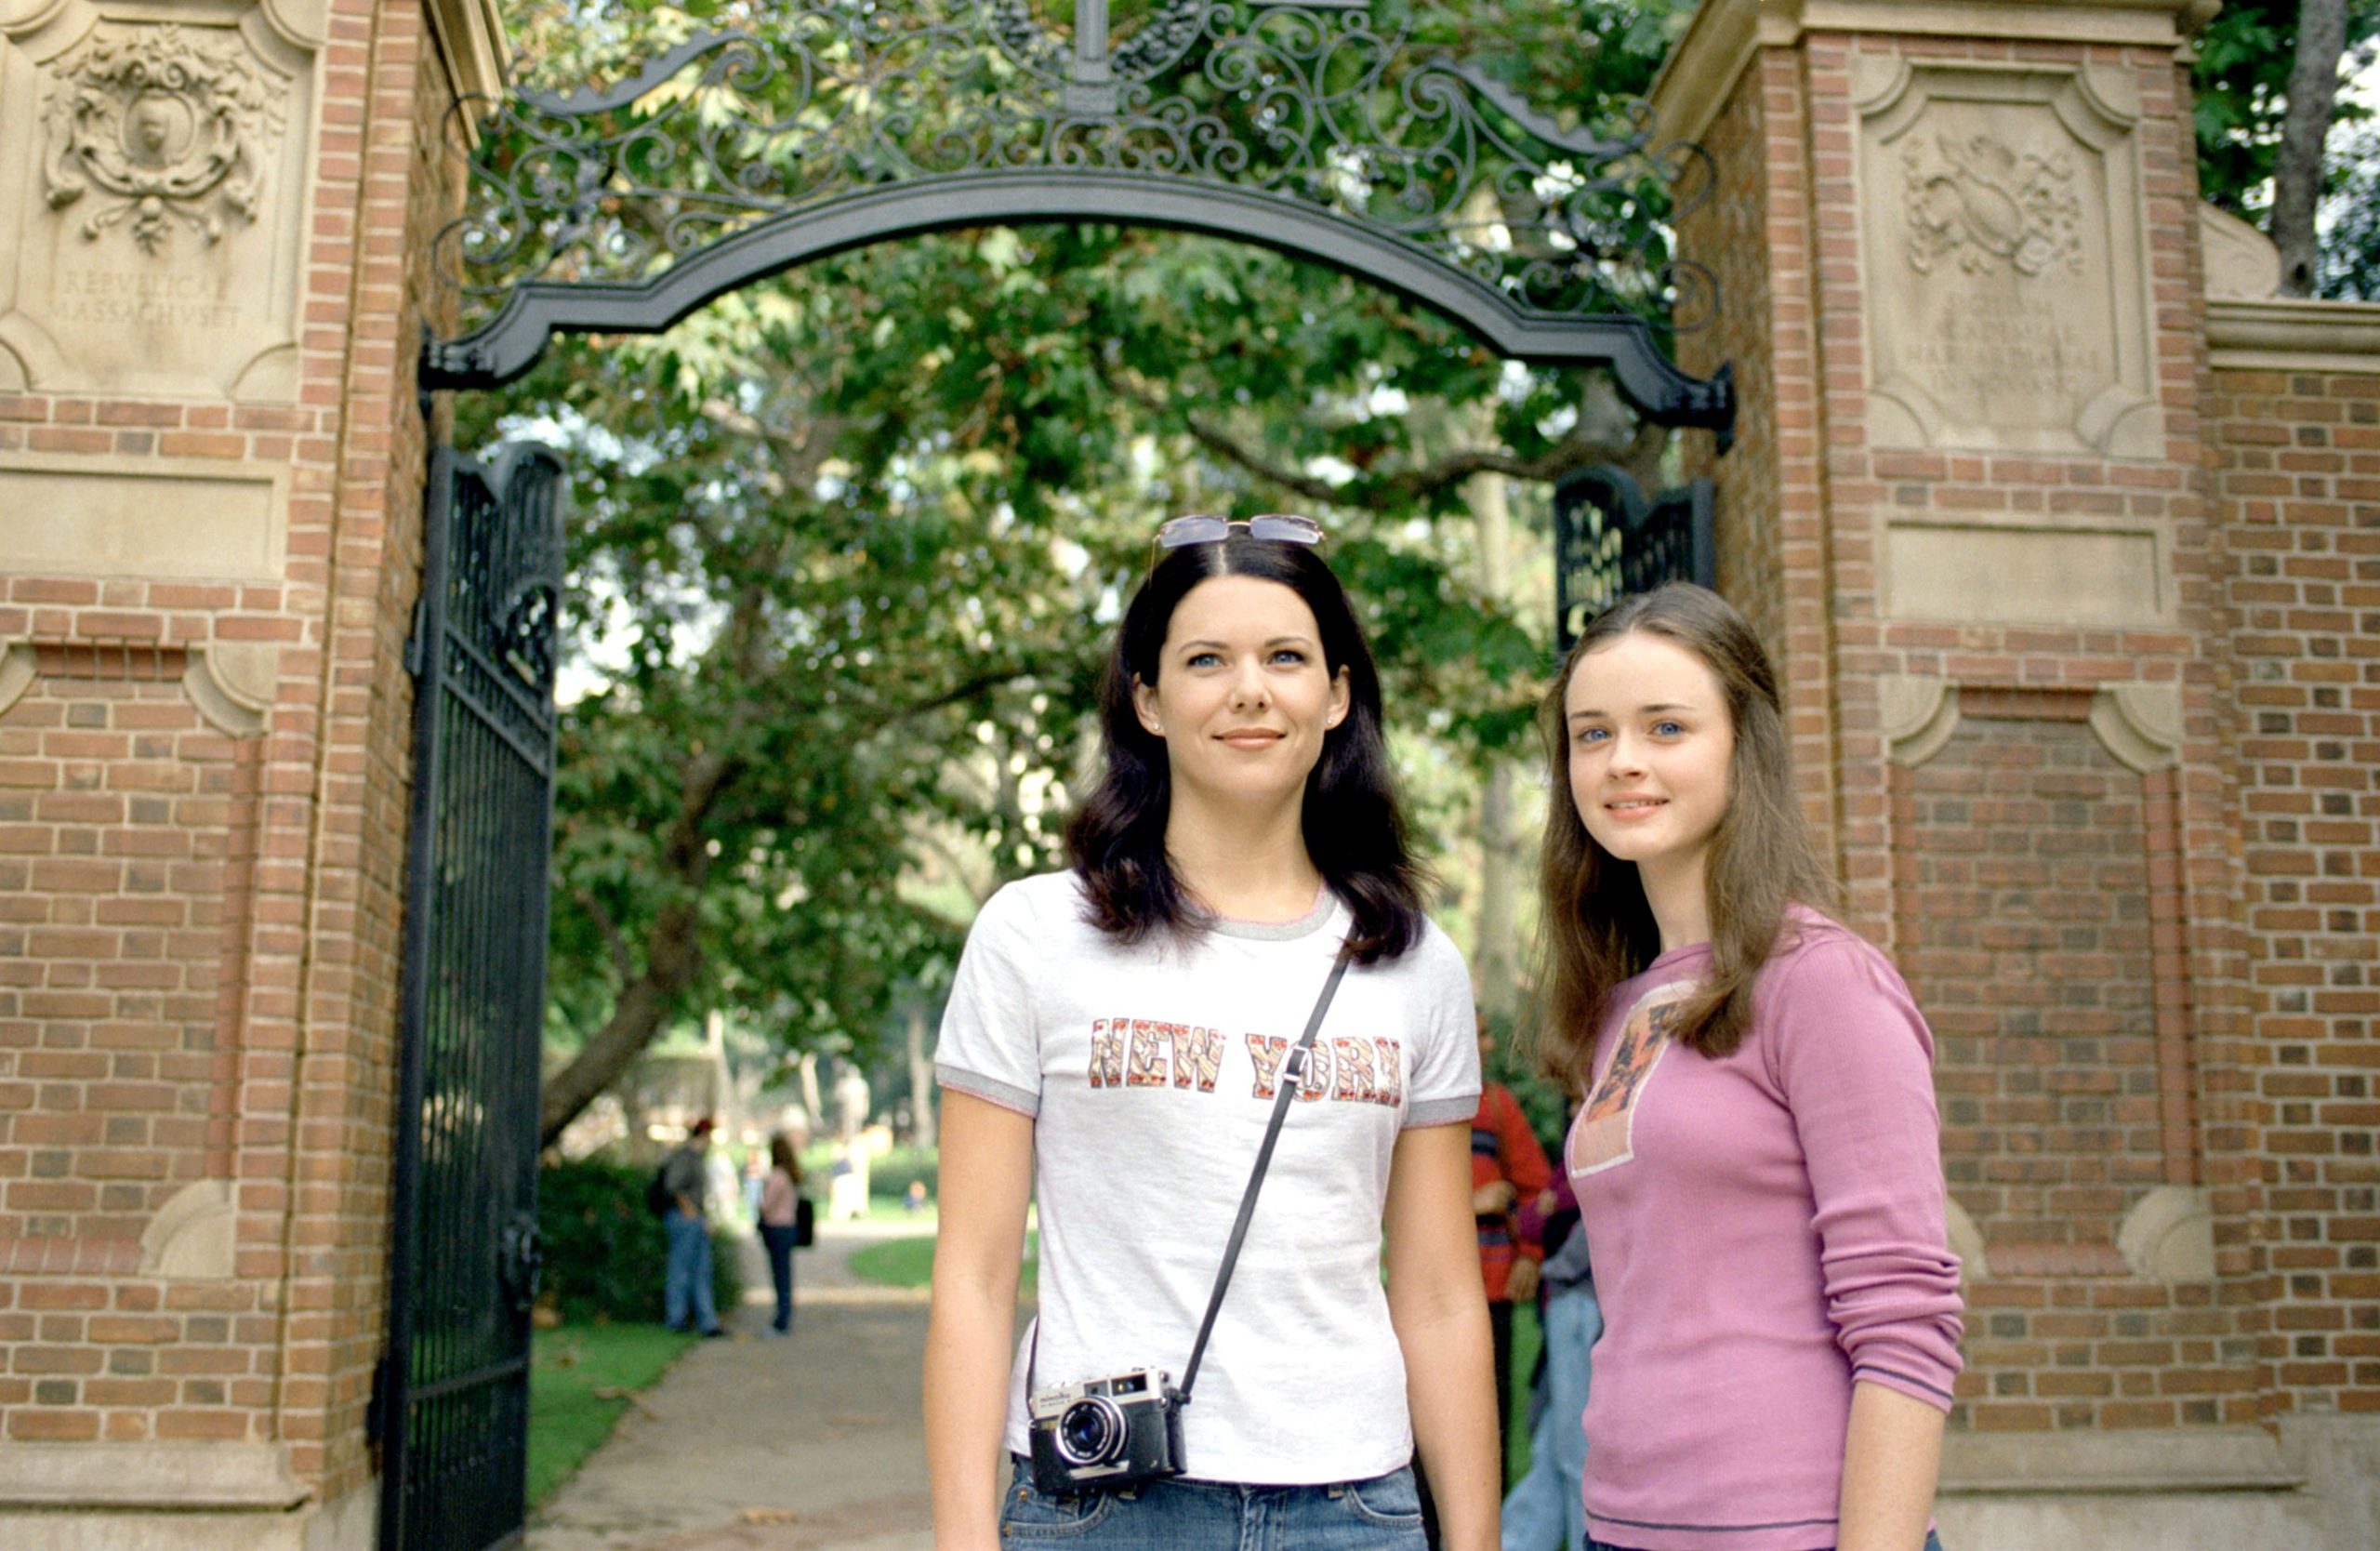 Lauren Graham, Alexis Bledel - 'The Road Trip To Havard' - Season 2 of Gilmore Girls